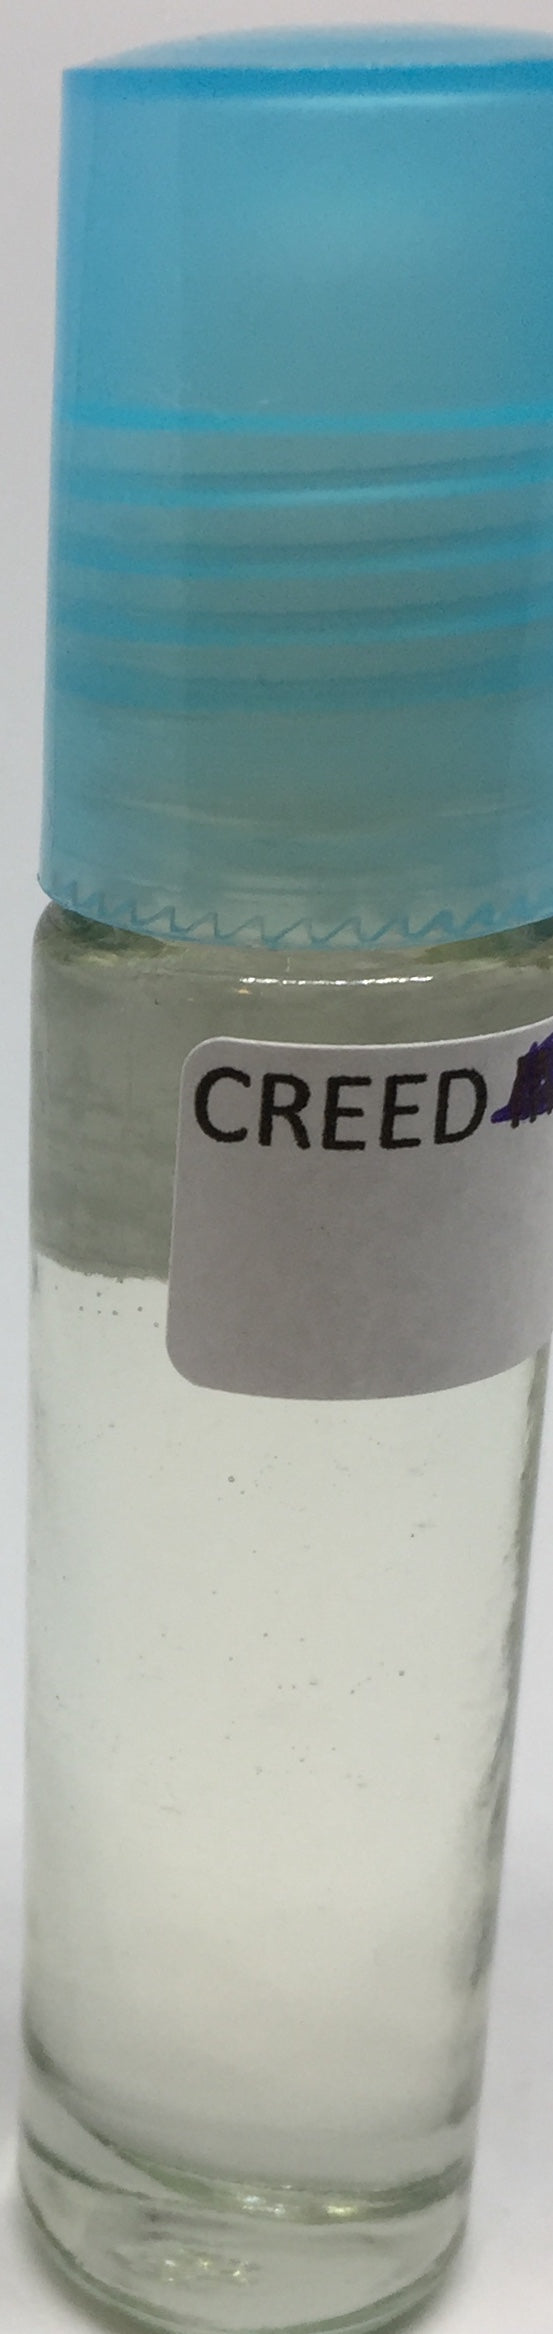 Creed Type: Fragrance(Perfume)Body Oil Men